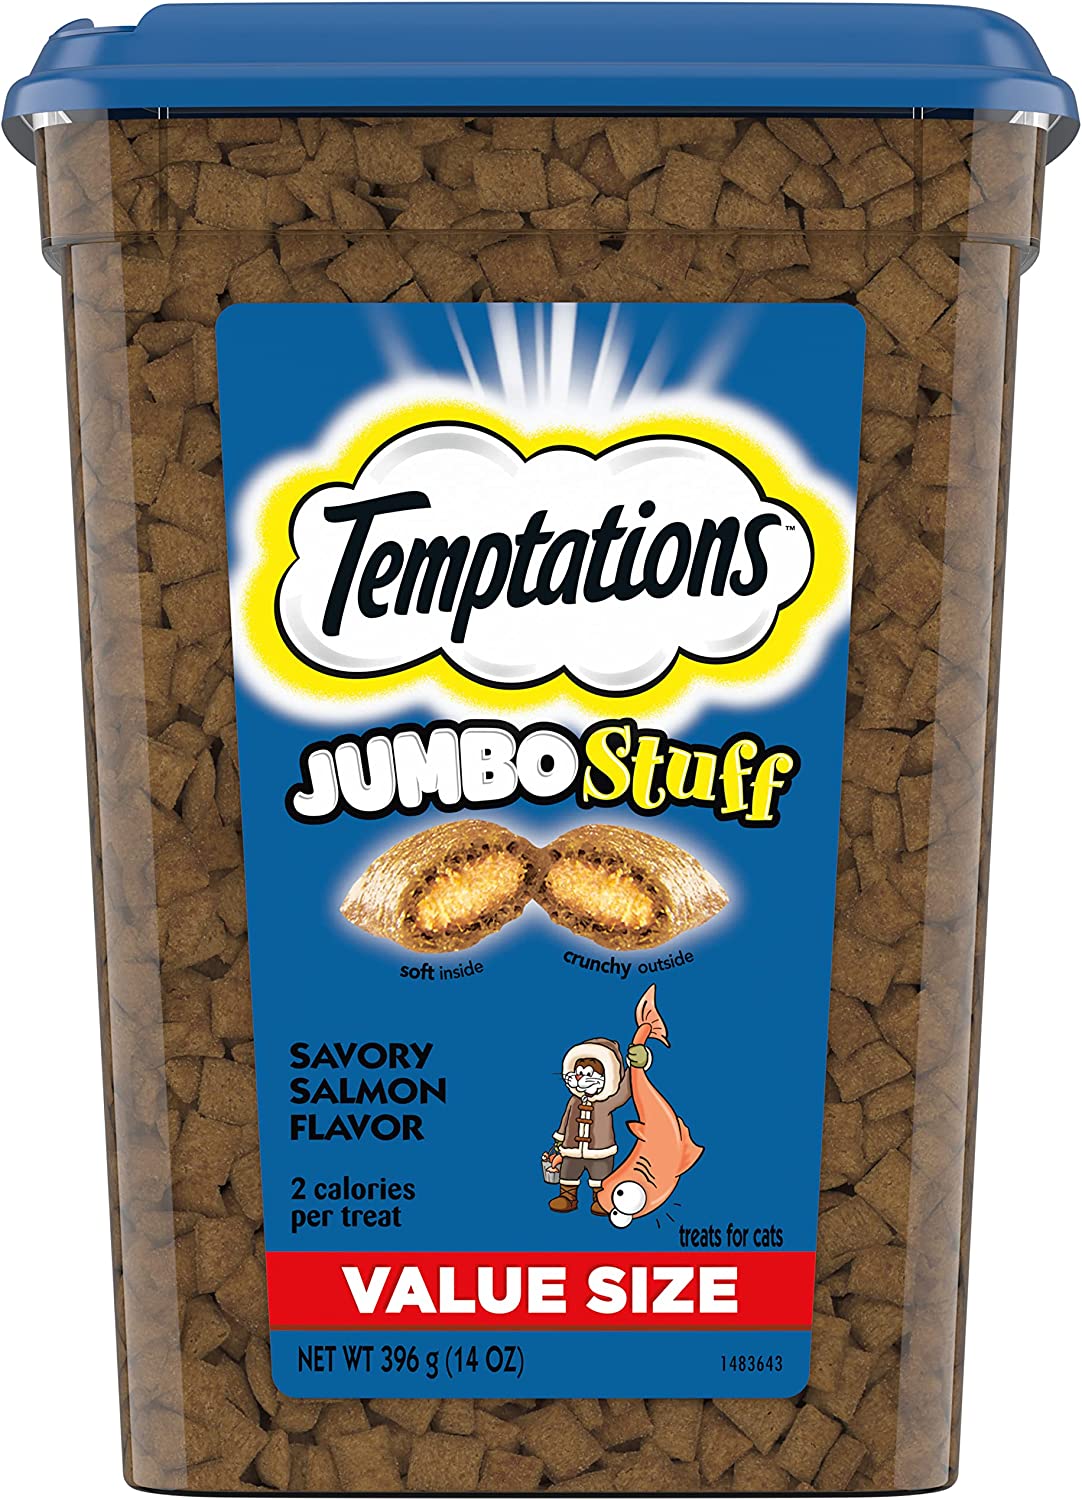 TEMPTATIONS Jumbo Stuff Crunchy and Soft Cat Treats, Savory Salmon Flavor, 14 oz. Tub $5.98 shipped w/ Prime